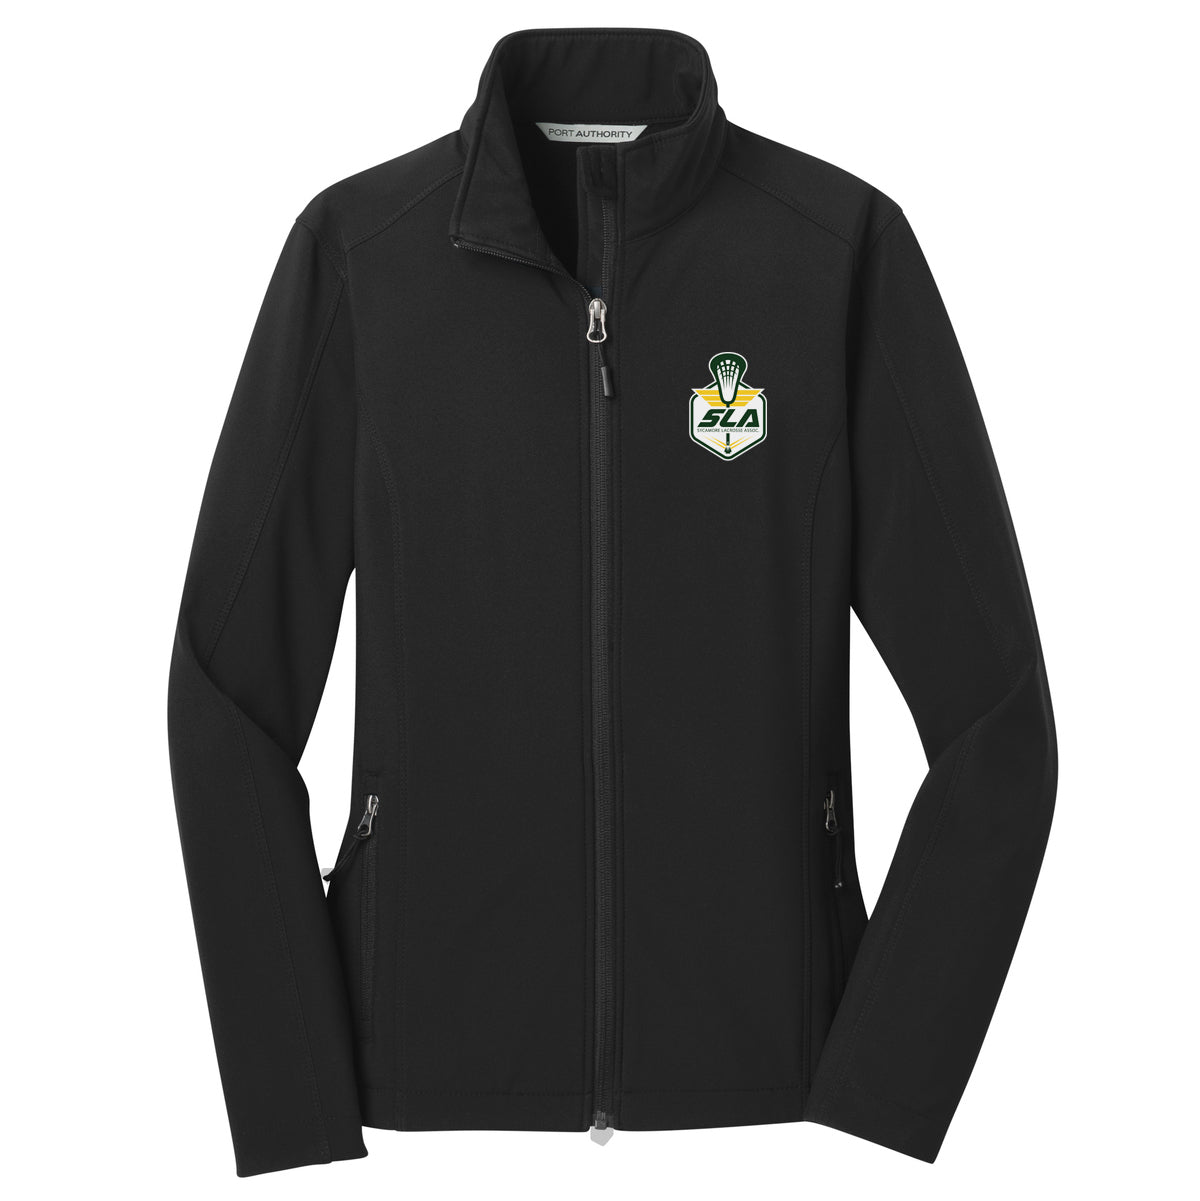 Sycamore Lacrosse Association Women's Black Soft Shell Jacket